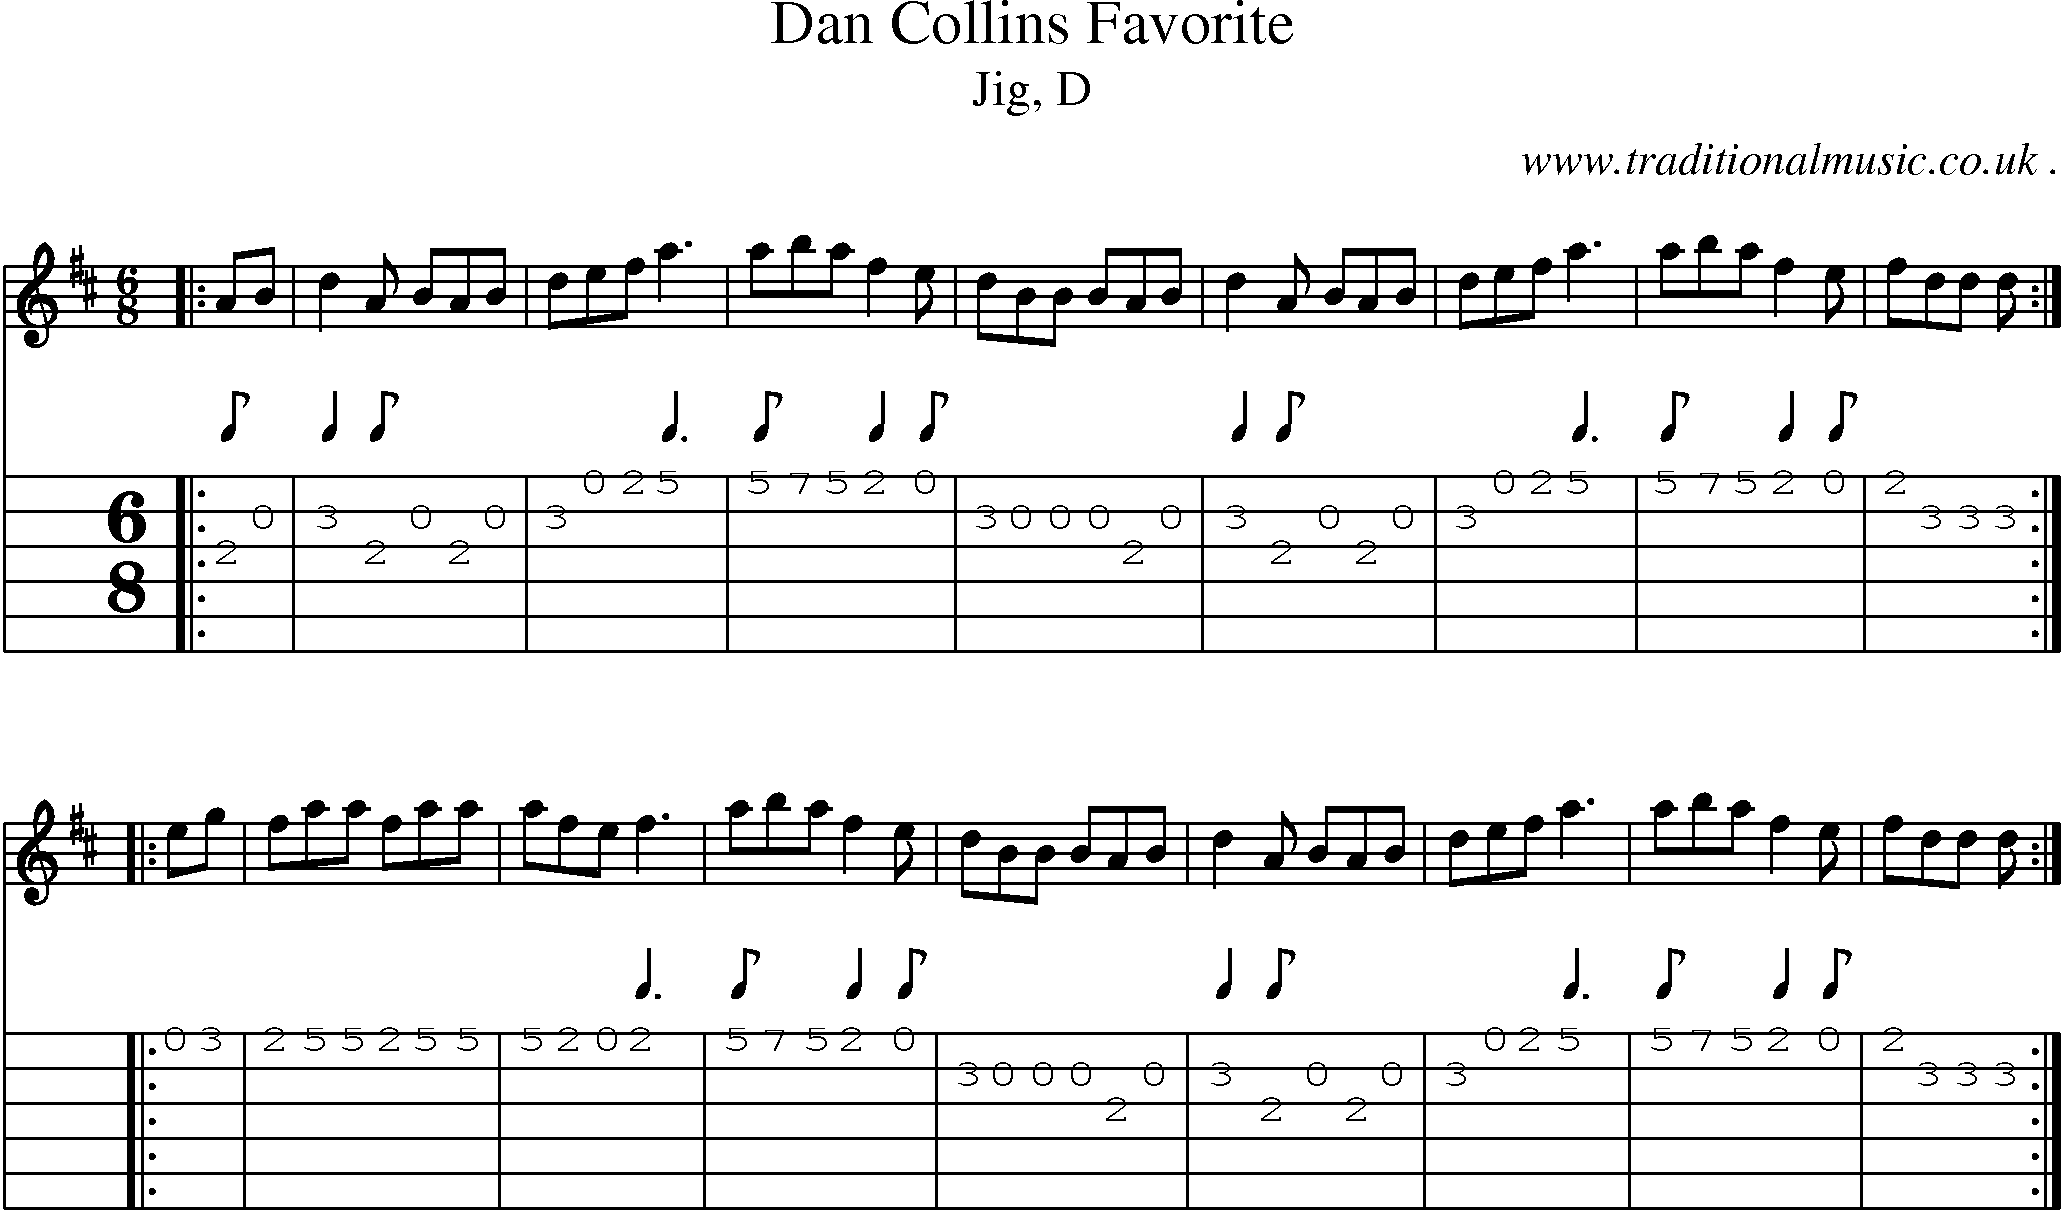 Sheet-music  score, Chords and Guitar Tabs for Dan Collins Favorite